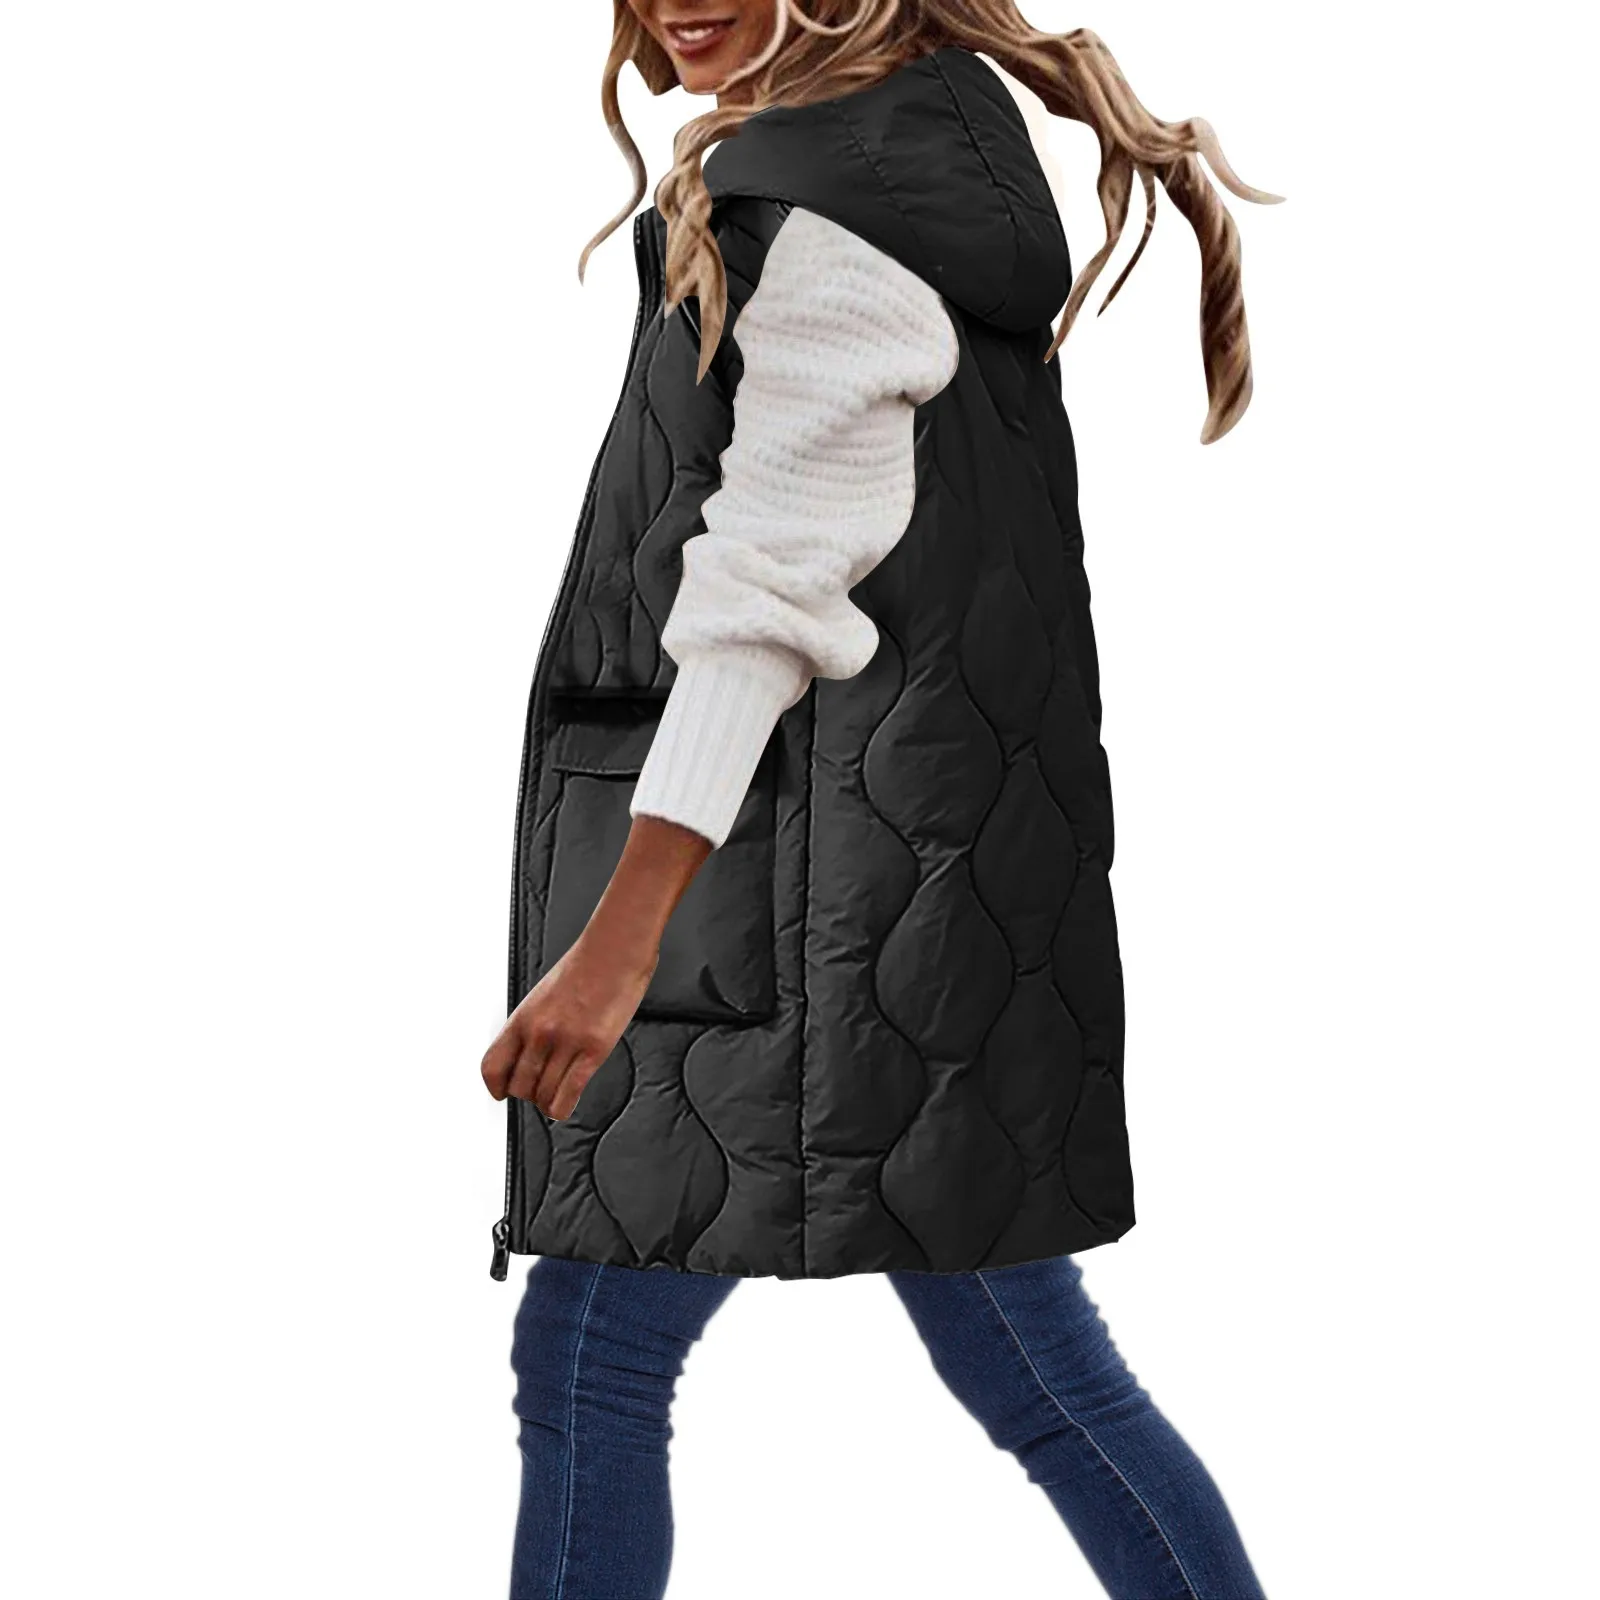 Winter Jacket Women Hooded Zipper Oversize Waistcoat Outerwear Cotton Padded Parka Fashion Quilted Vest Sleeveless Long Coats